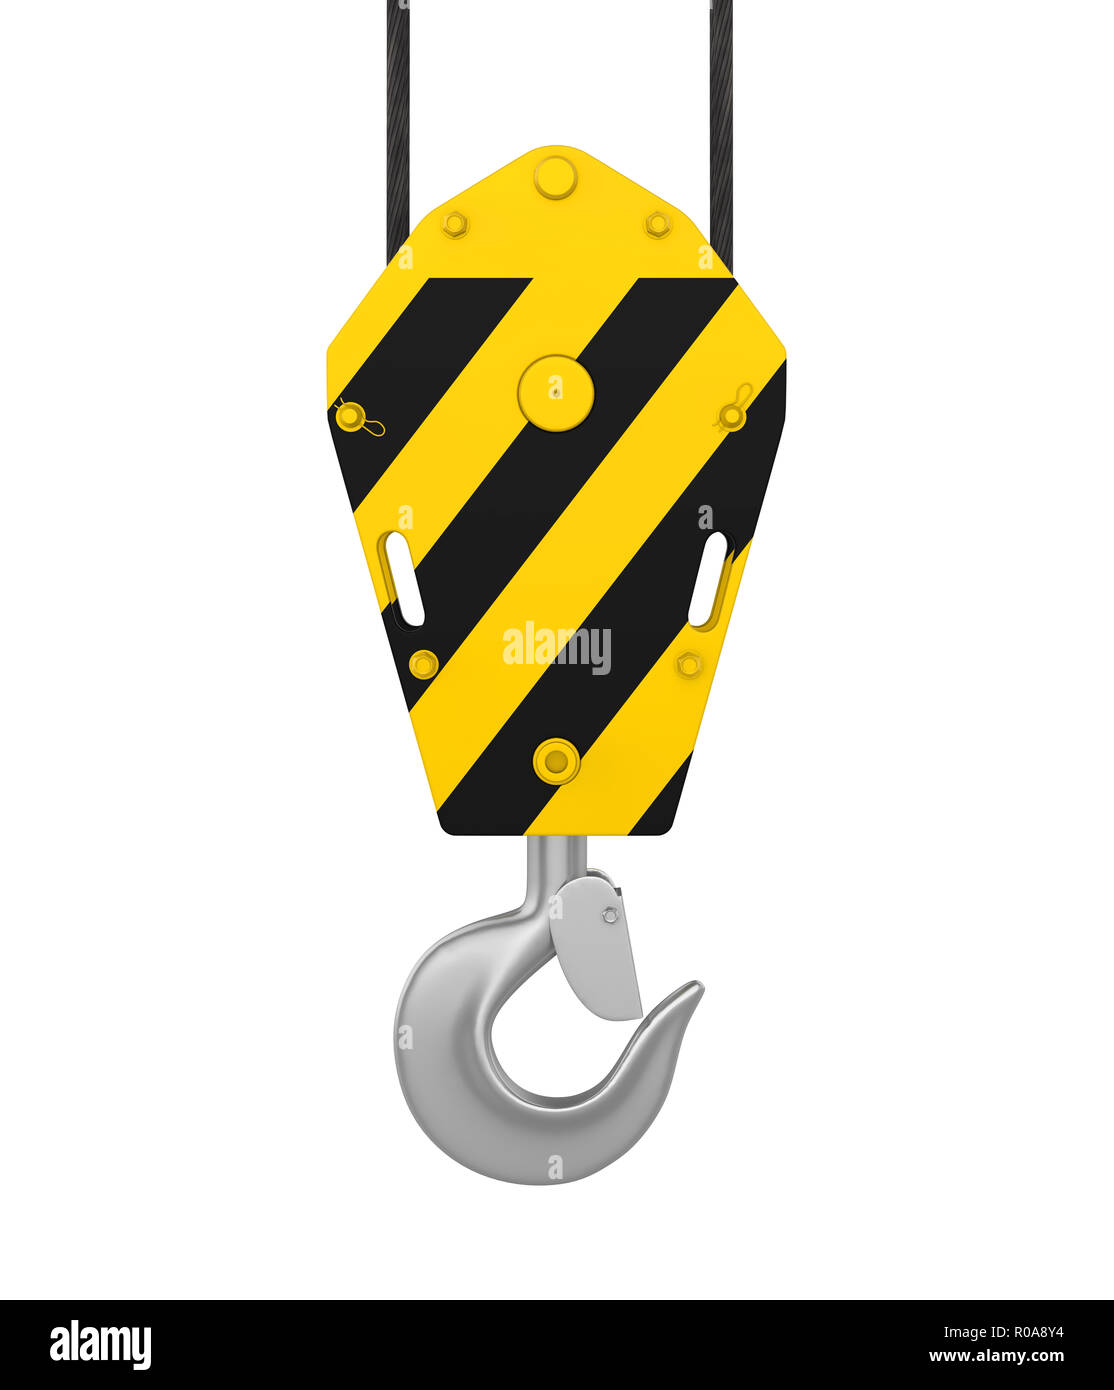 Construction crane hook Cut Out Stock Images & Pictures - Alamy